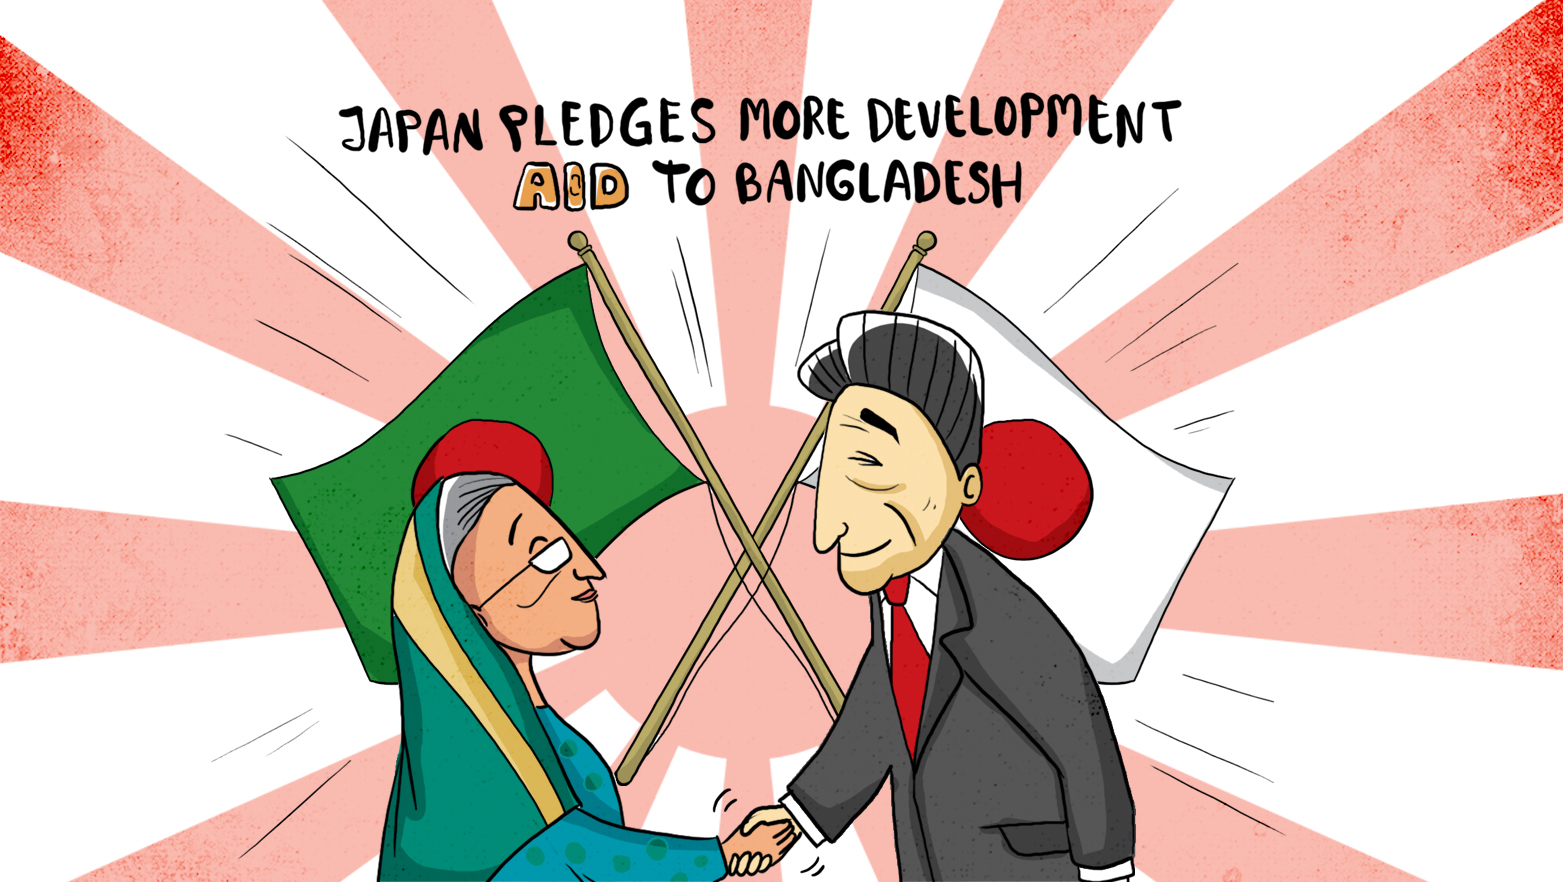 Japan pledges more development aid for Bangladesh